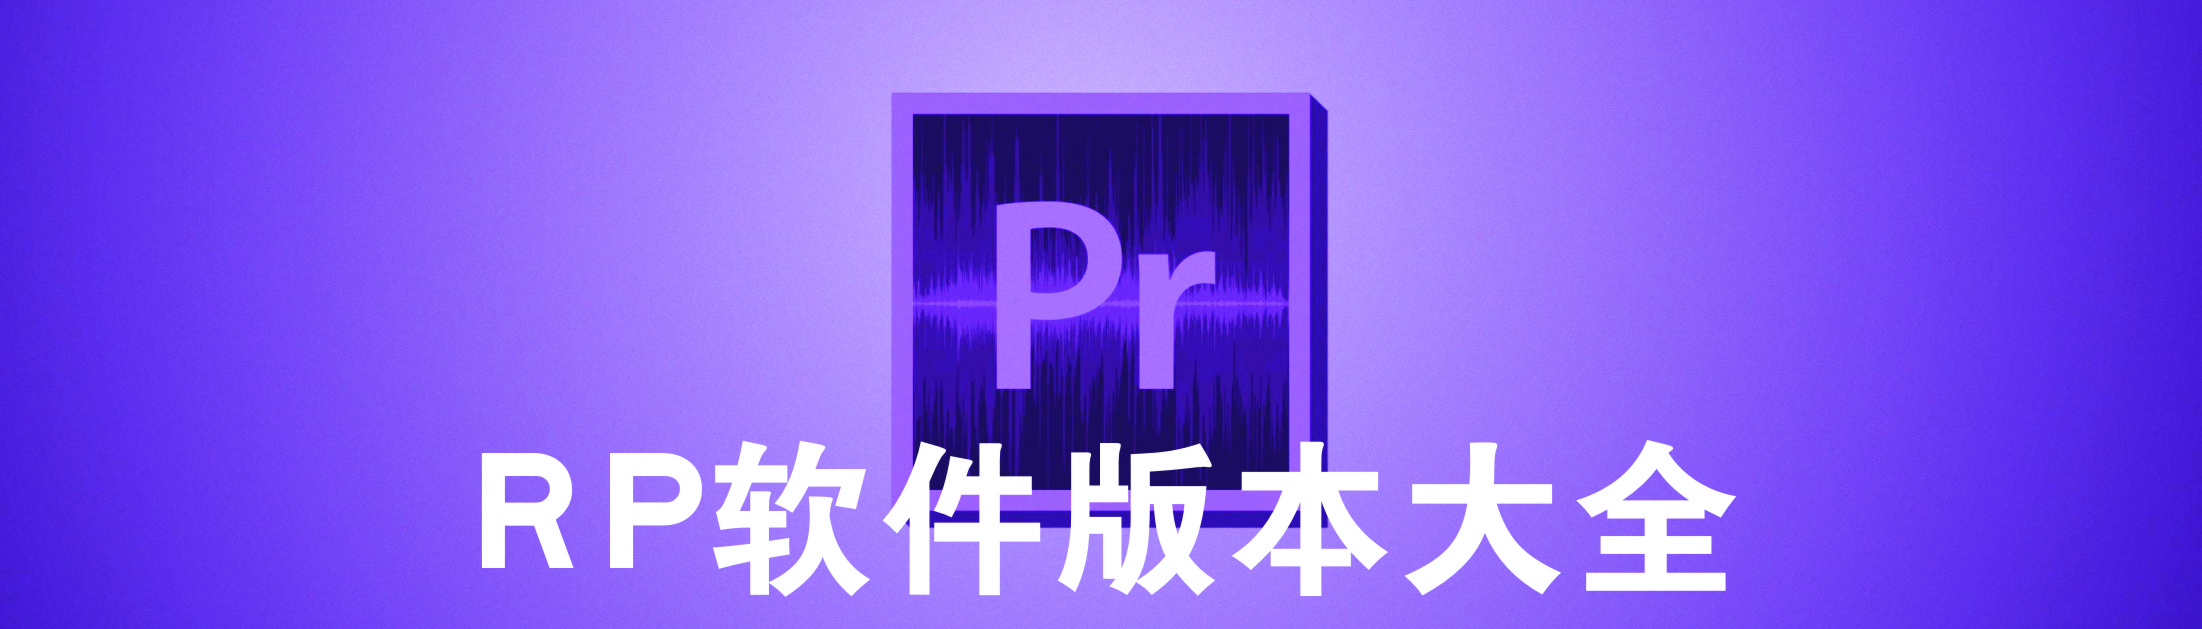 PR_PRƽ_PR_Adobe Premiere CS6/2017/2018/2019/2022/2023